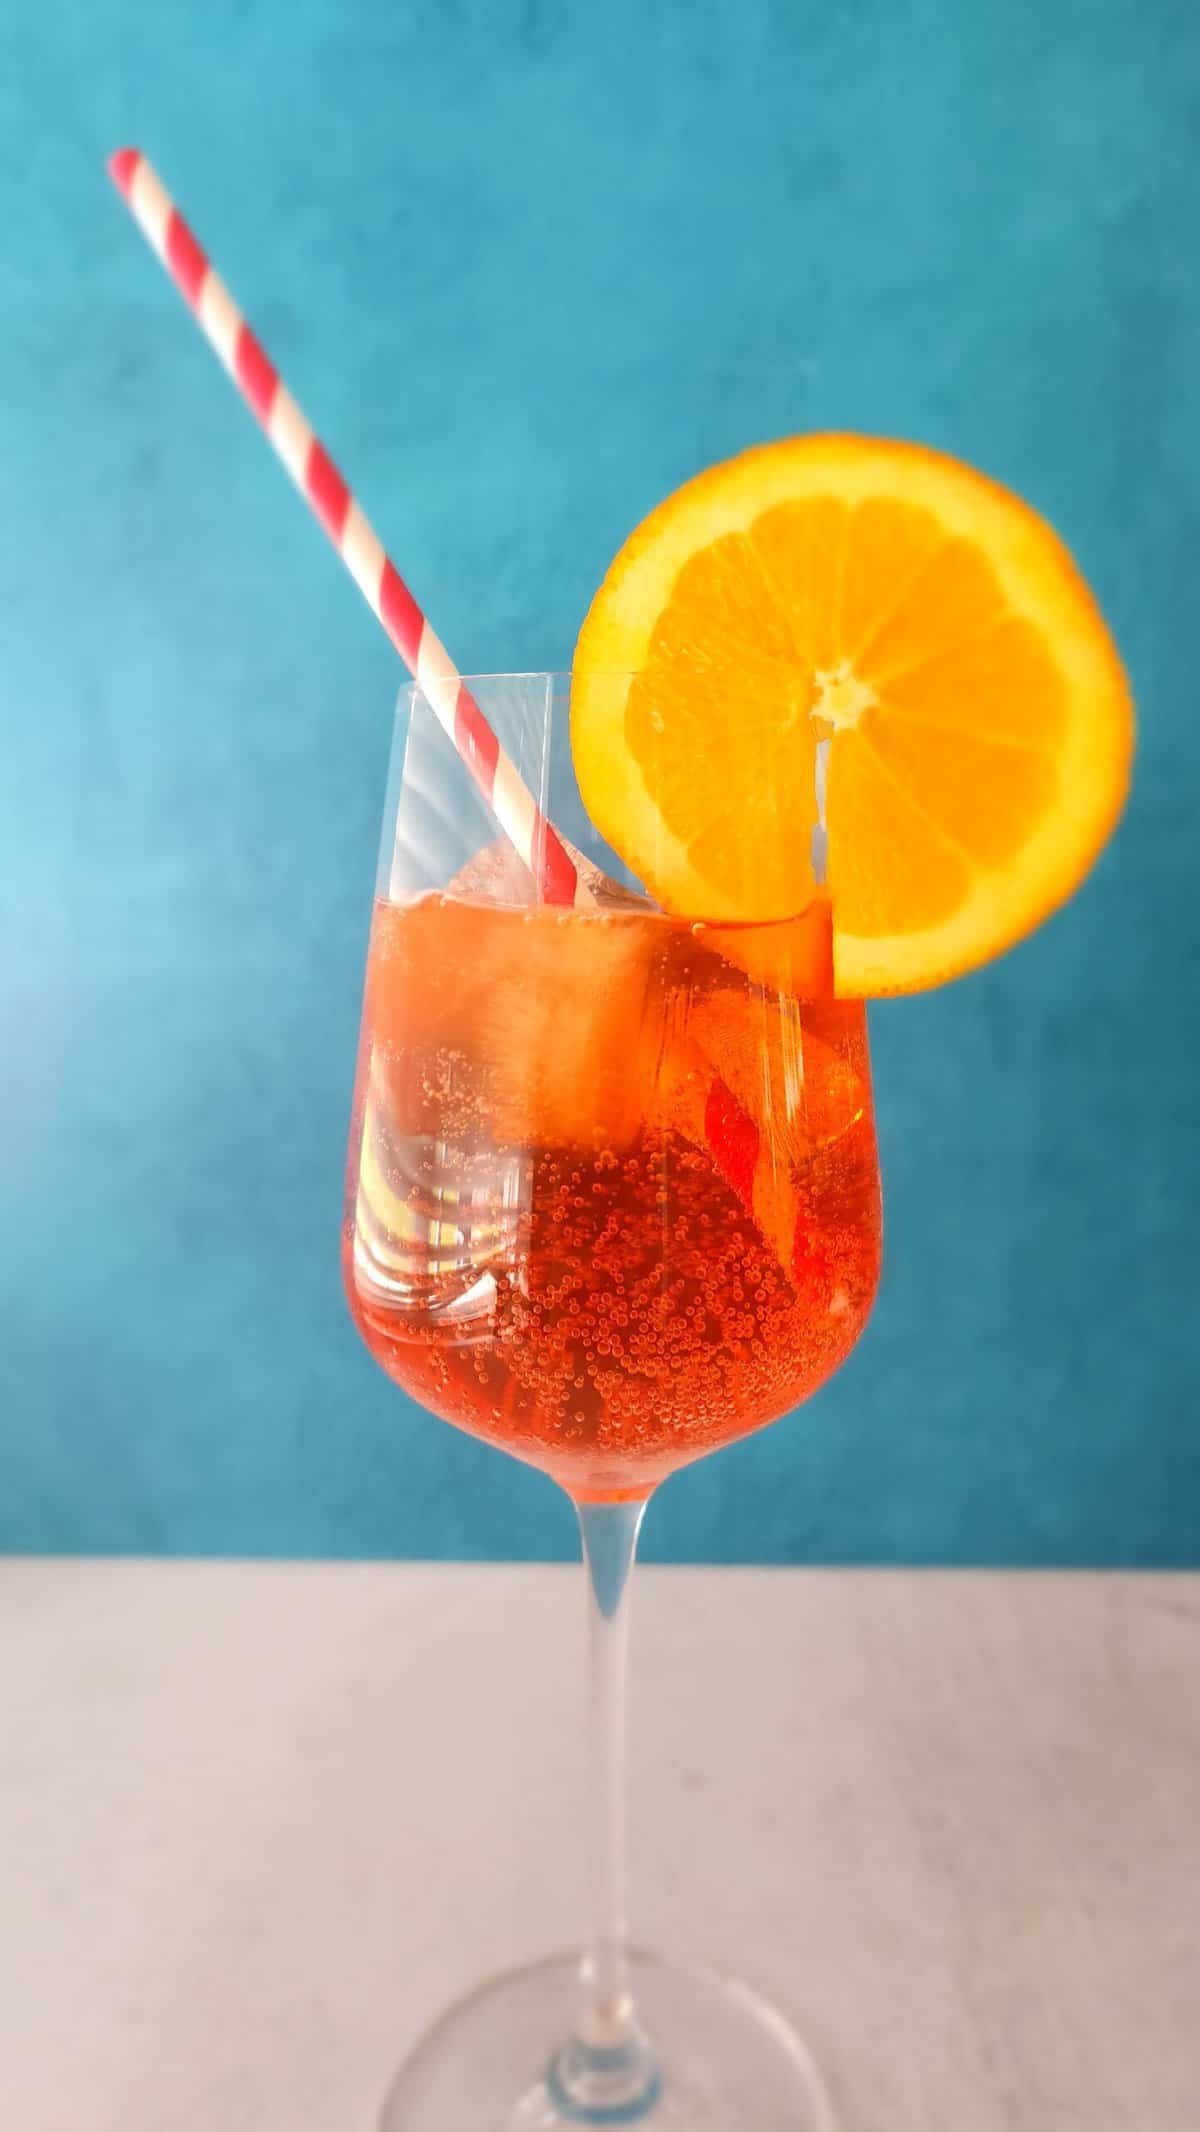 Aperol Spritz Recipe 3-2-1 (The perfect cocktail!)